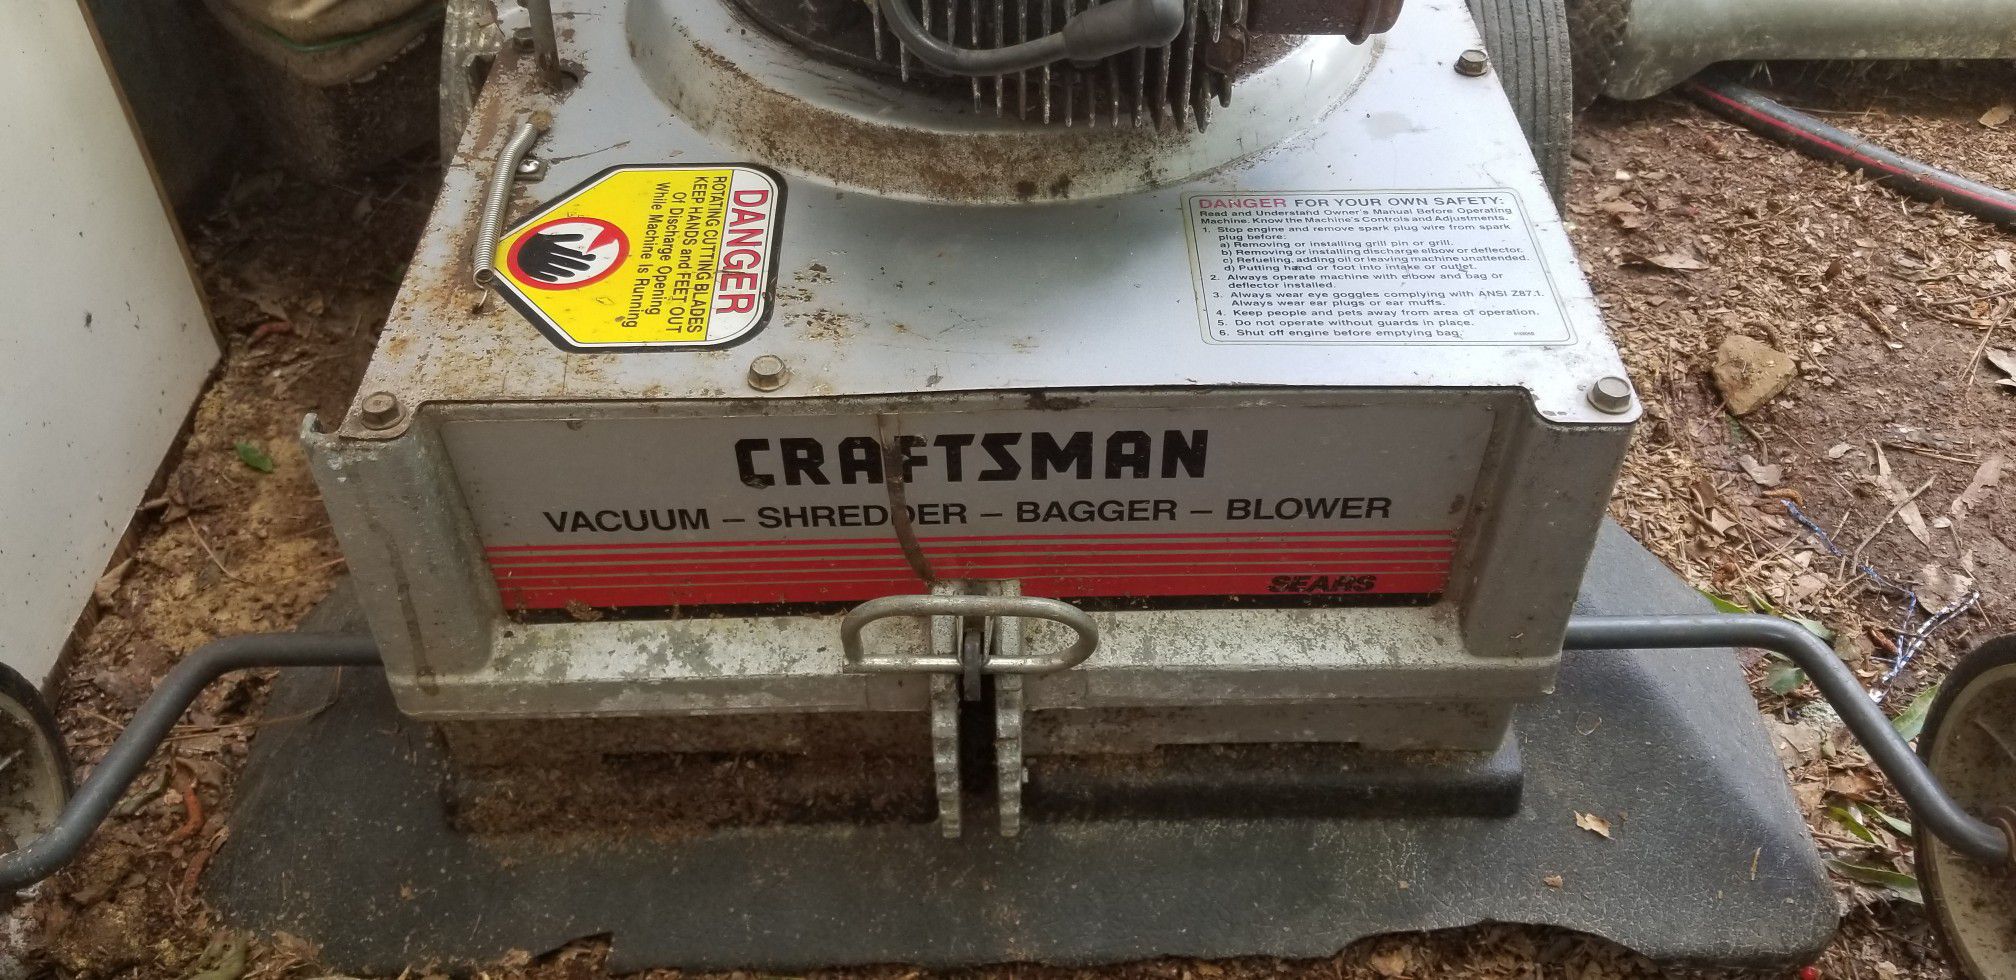 Craftsman Vacuum-Shredder-Bagger-Blower